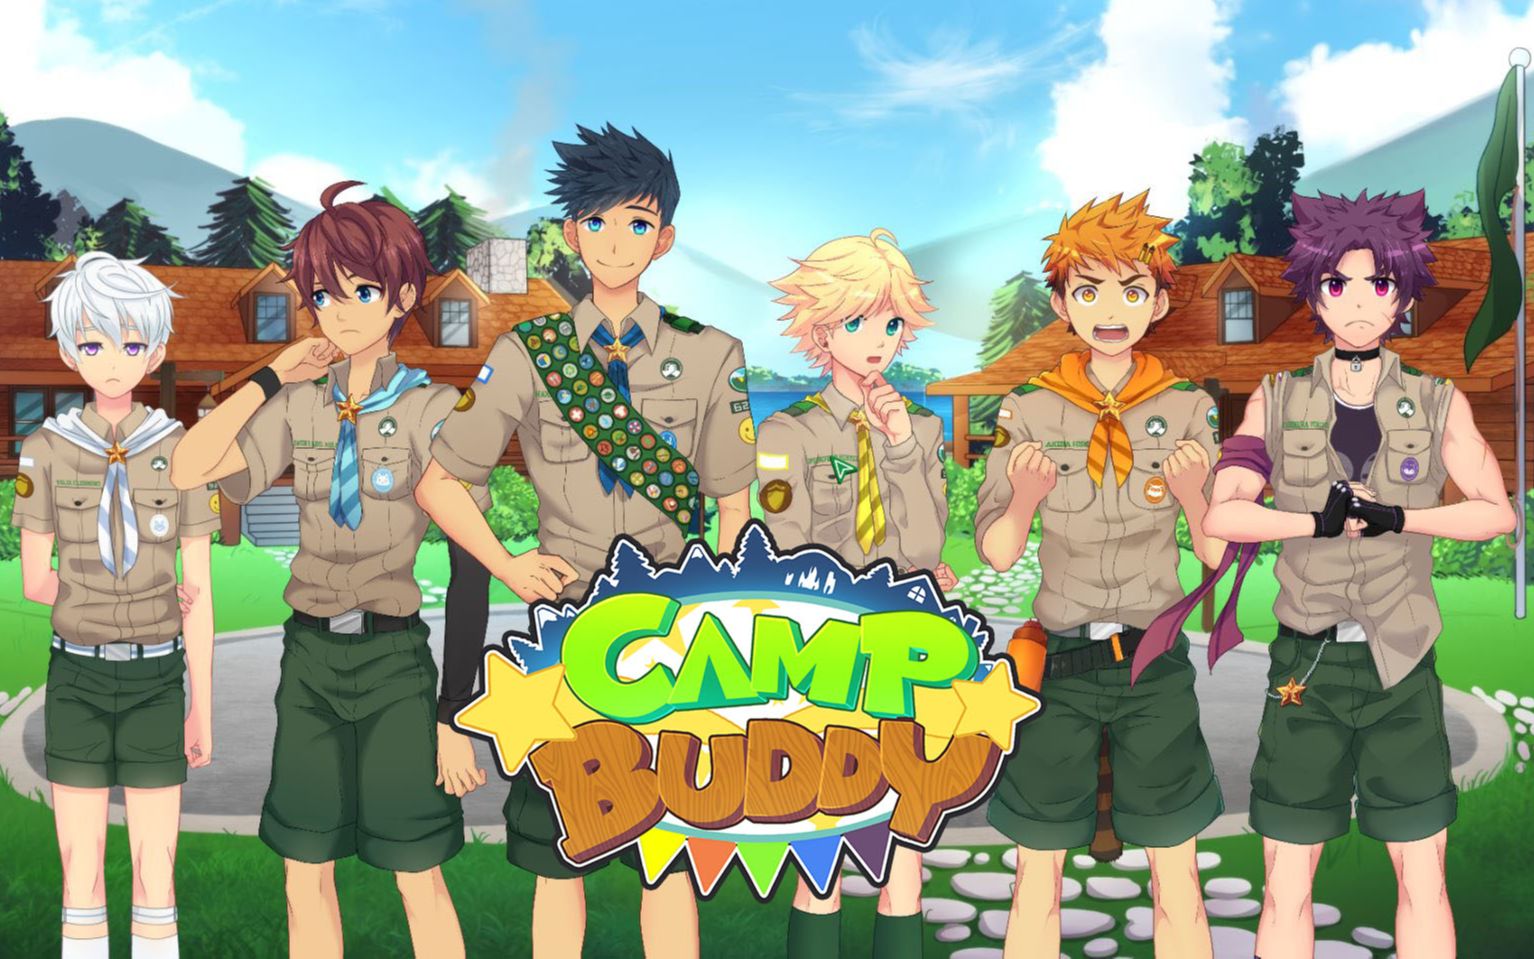 Camp buddy hiro. Camp buddy сето. Dynasty Warriors 6: Camp buddy. Сахарная слива Camp buddy. Camp buddy Hunter.